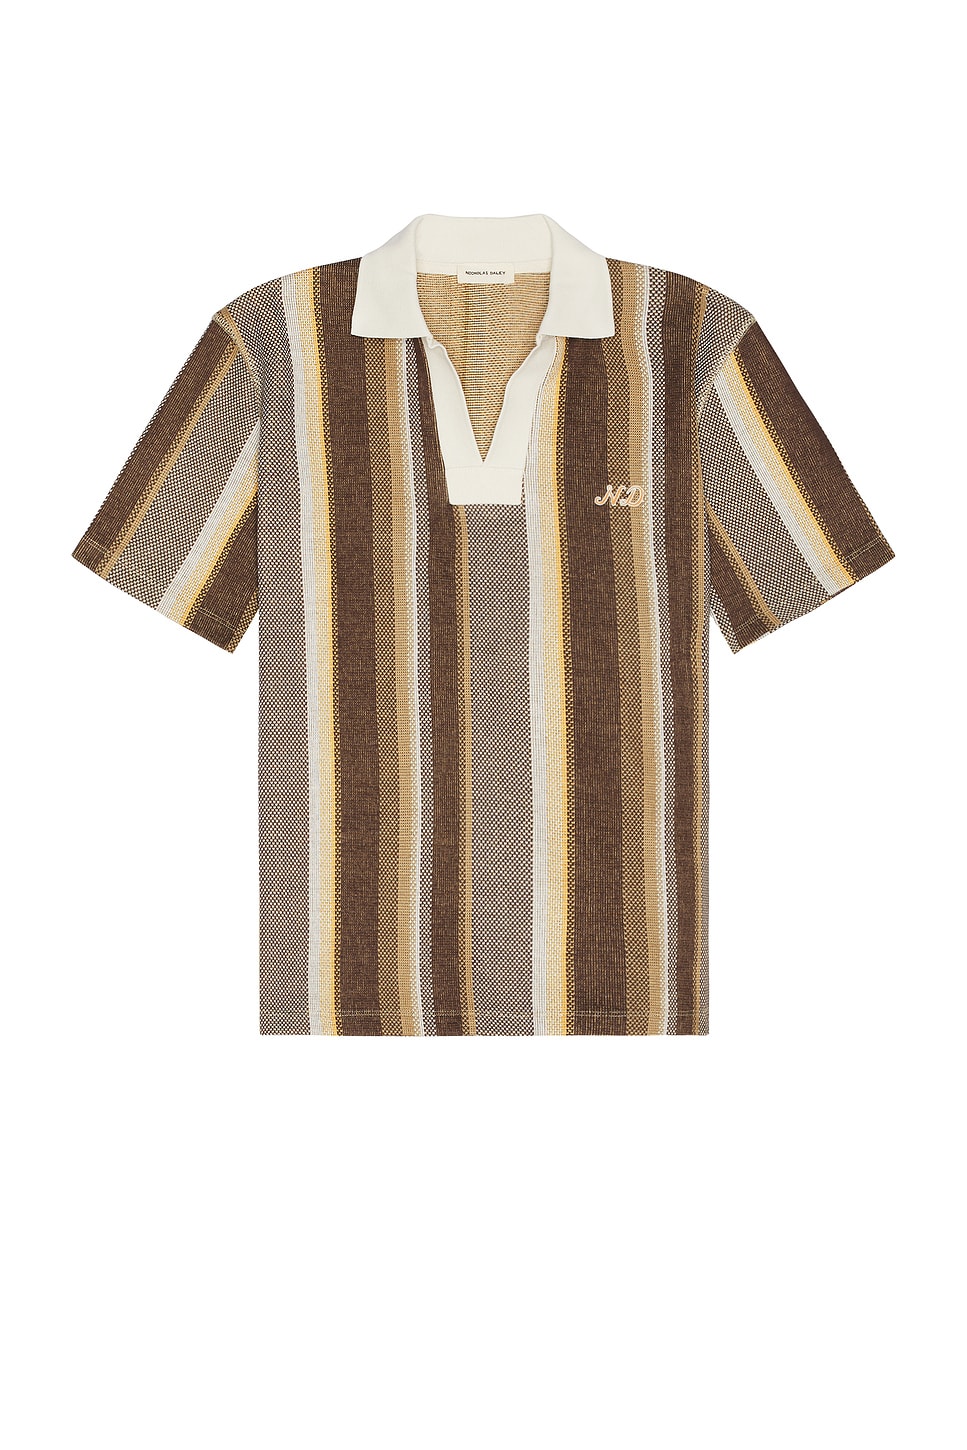 Image 1 of Nicholas Daley Striped Polo in Brown, Ecru, & Mustard